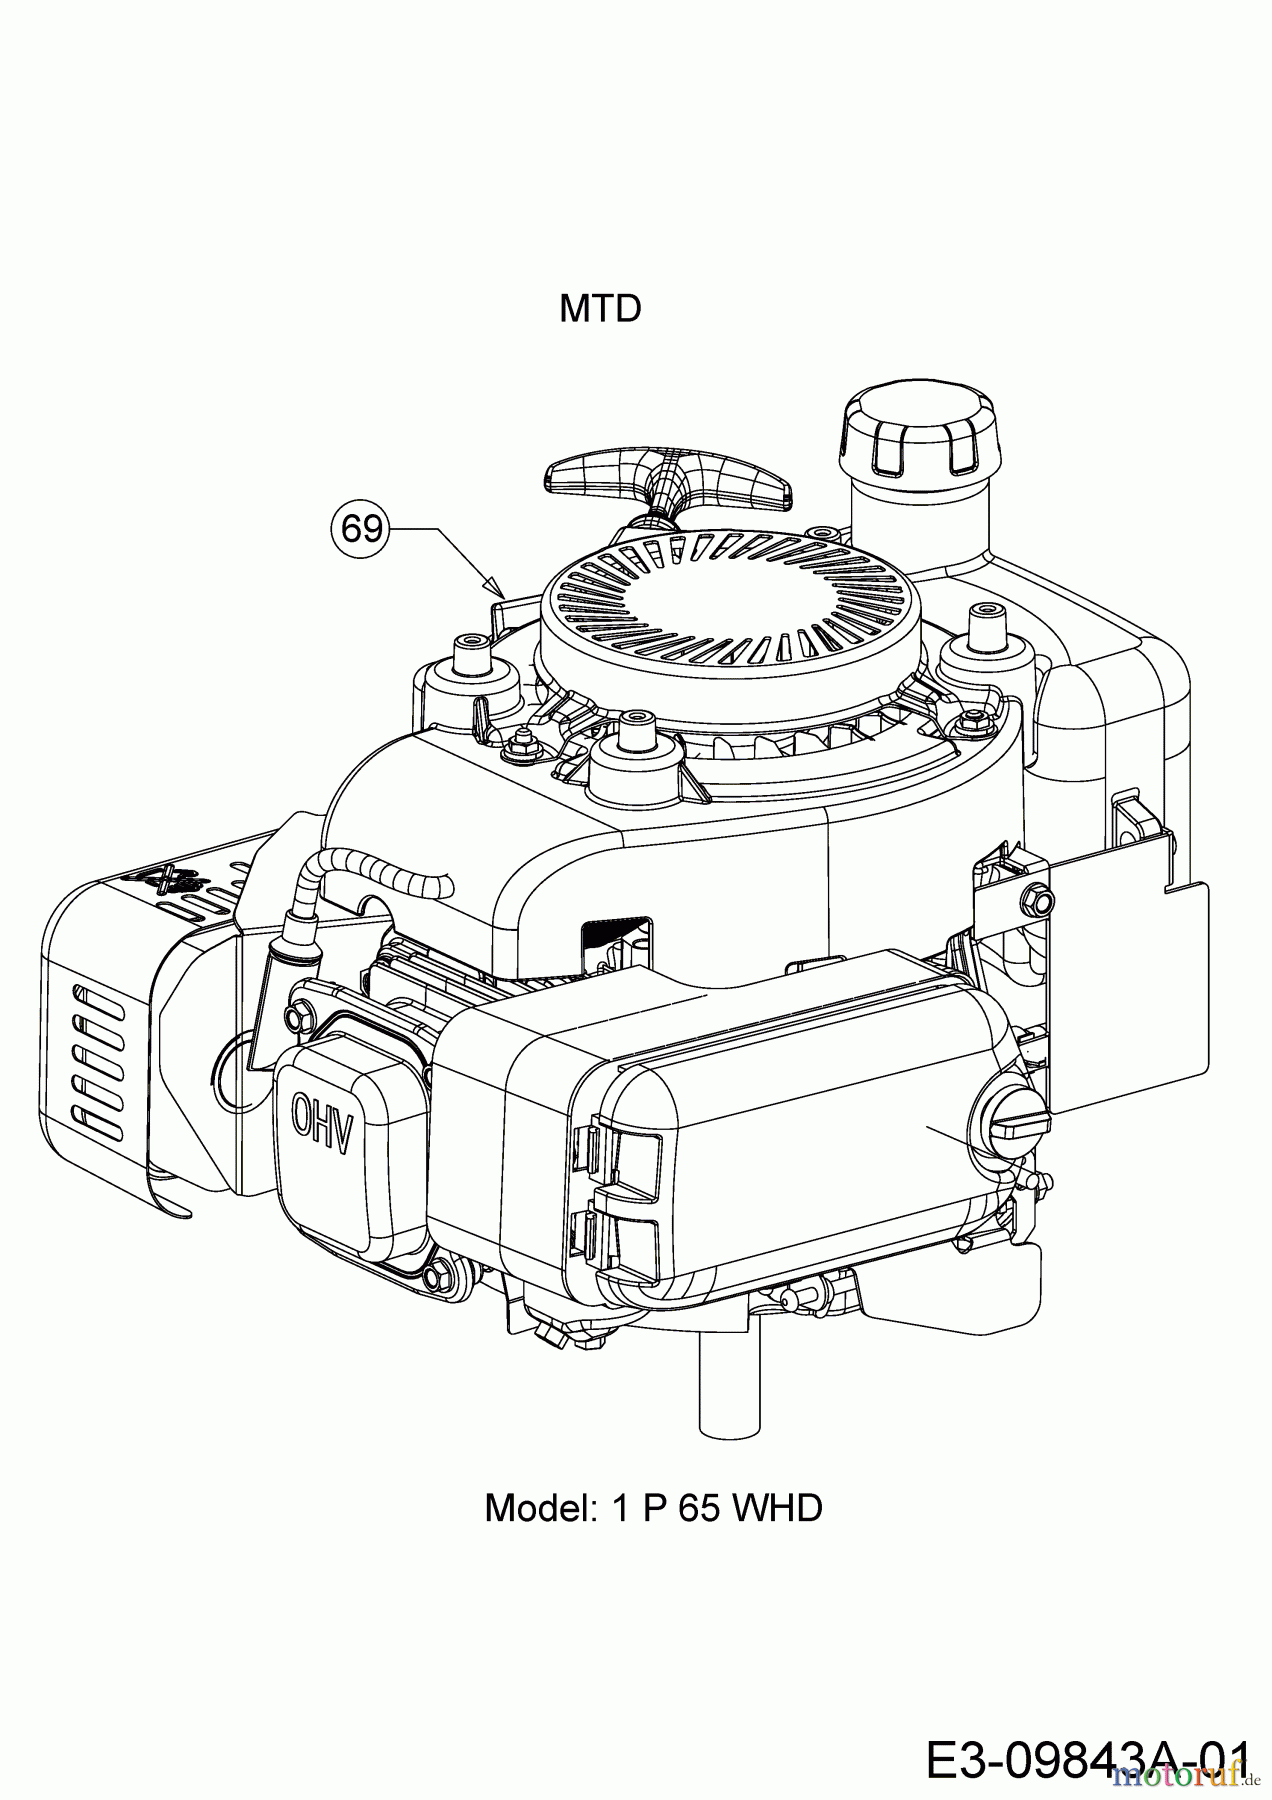  MTD Tillers T/205 21D-20MI678  (2016) Engine MTD